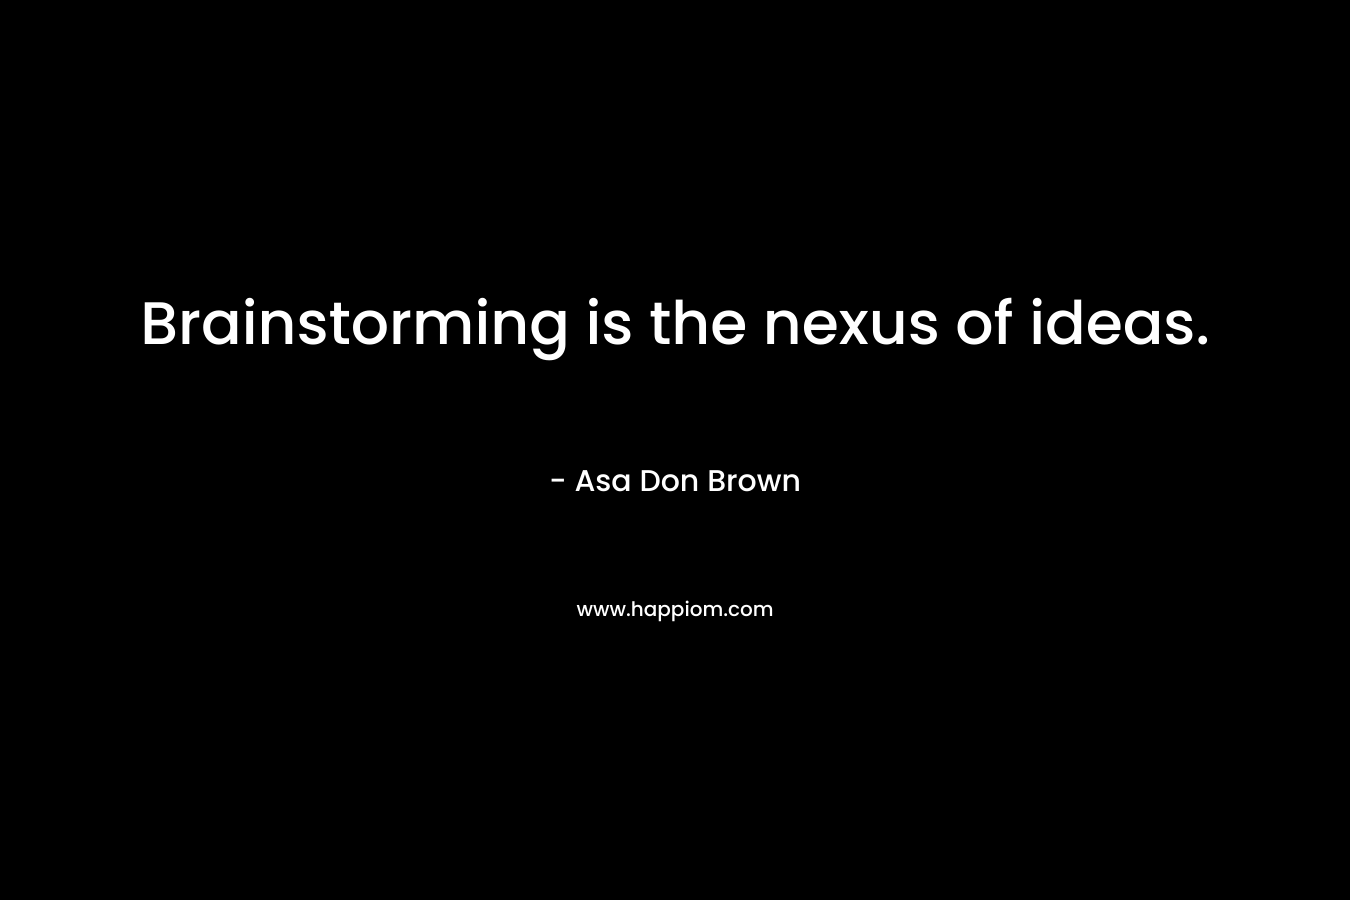 Brainstorming is the nexus of ideas. – Asa Don Brown